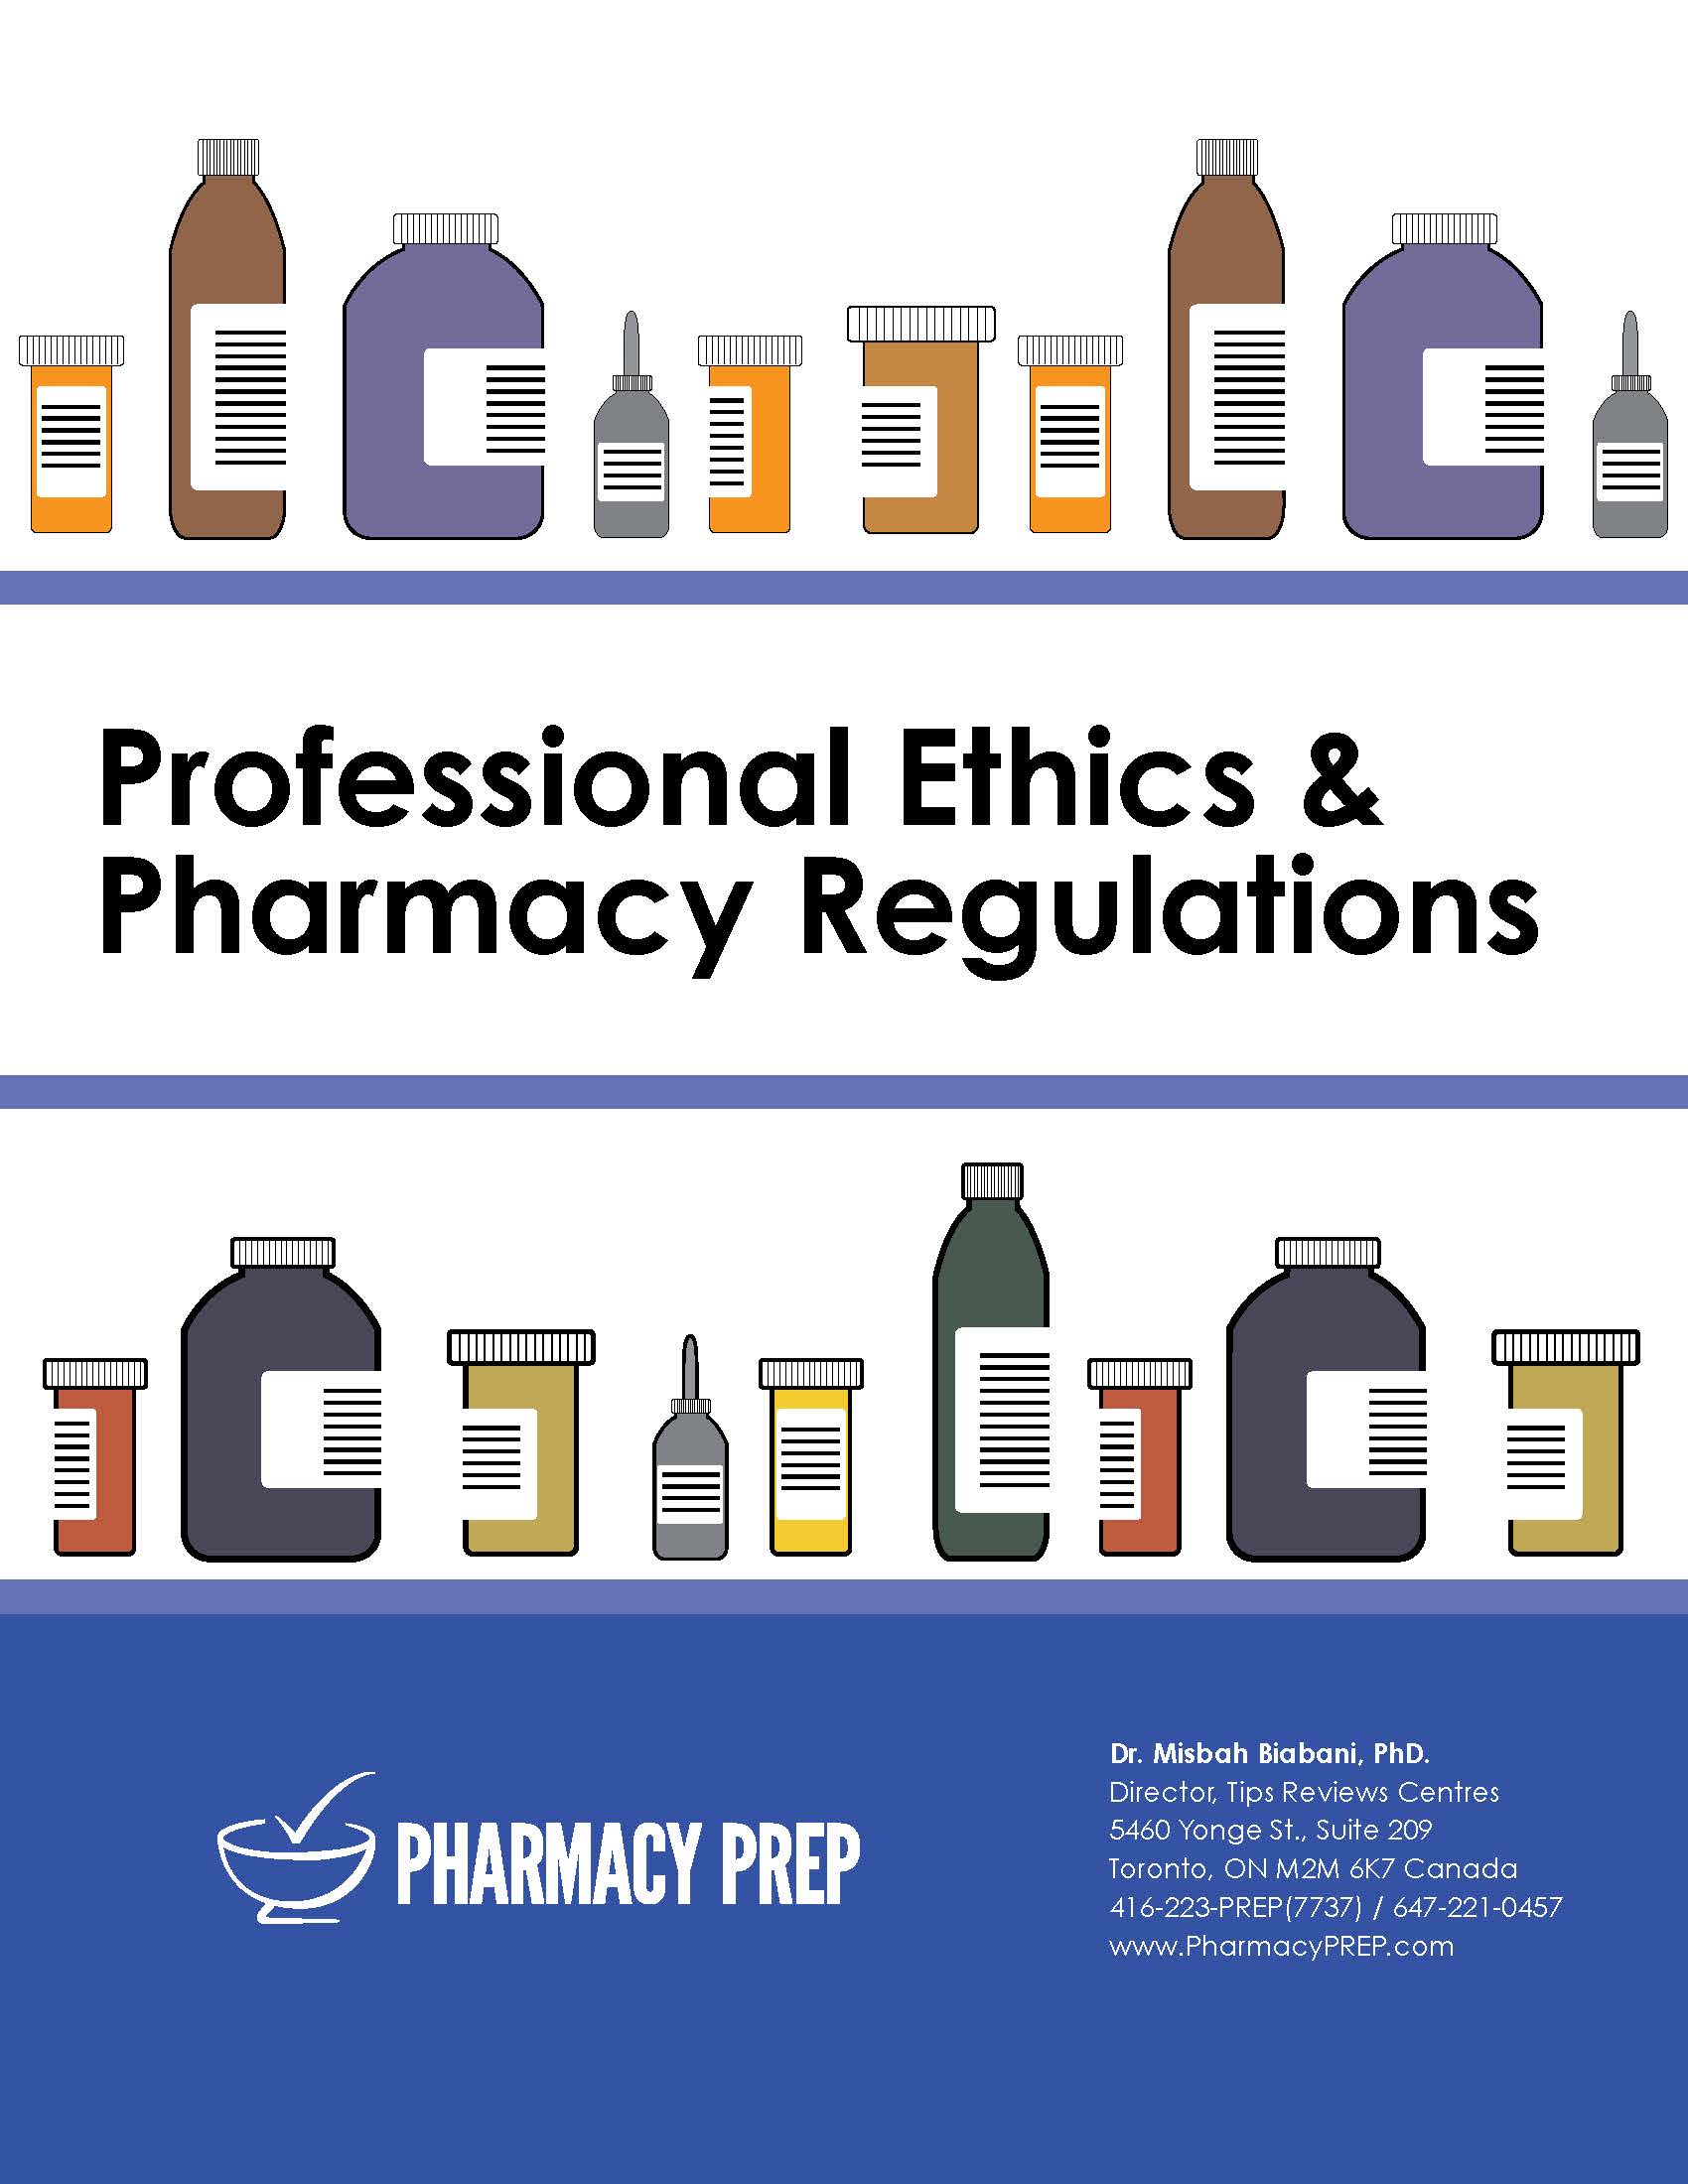 Professional Ethics & Pharmacy Regulations - Misbah Biabani, Ph.D.